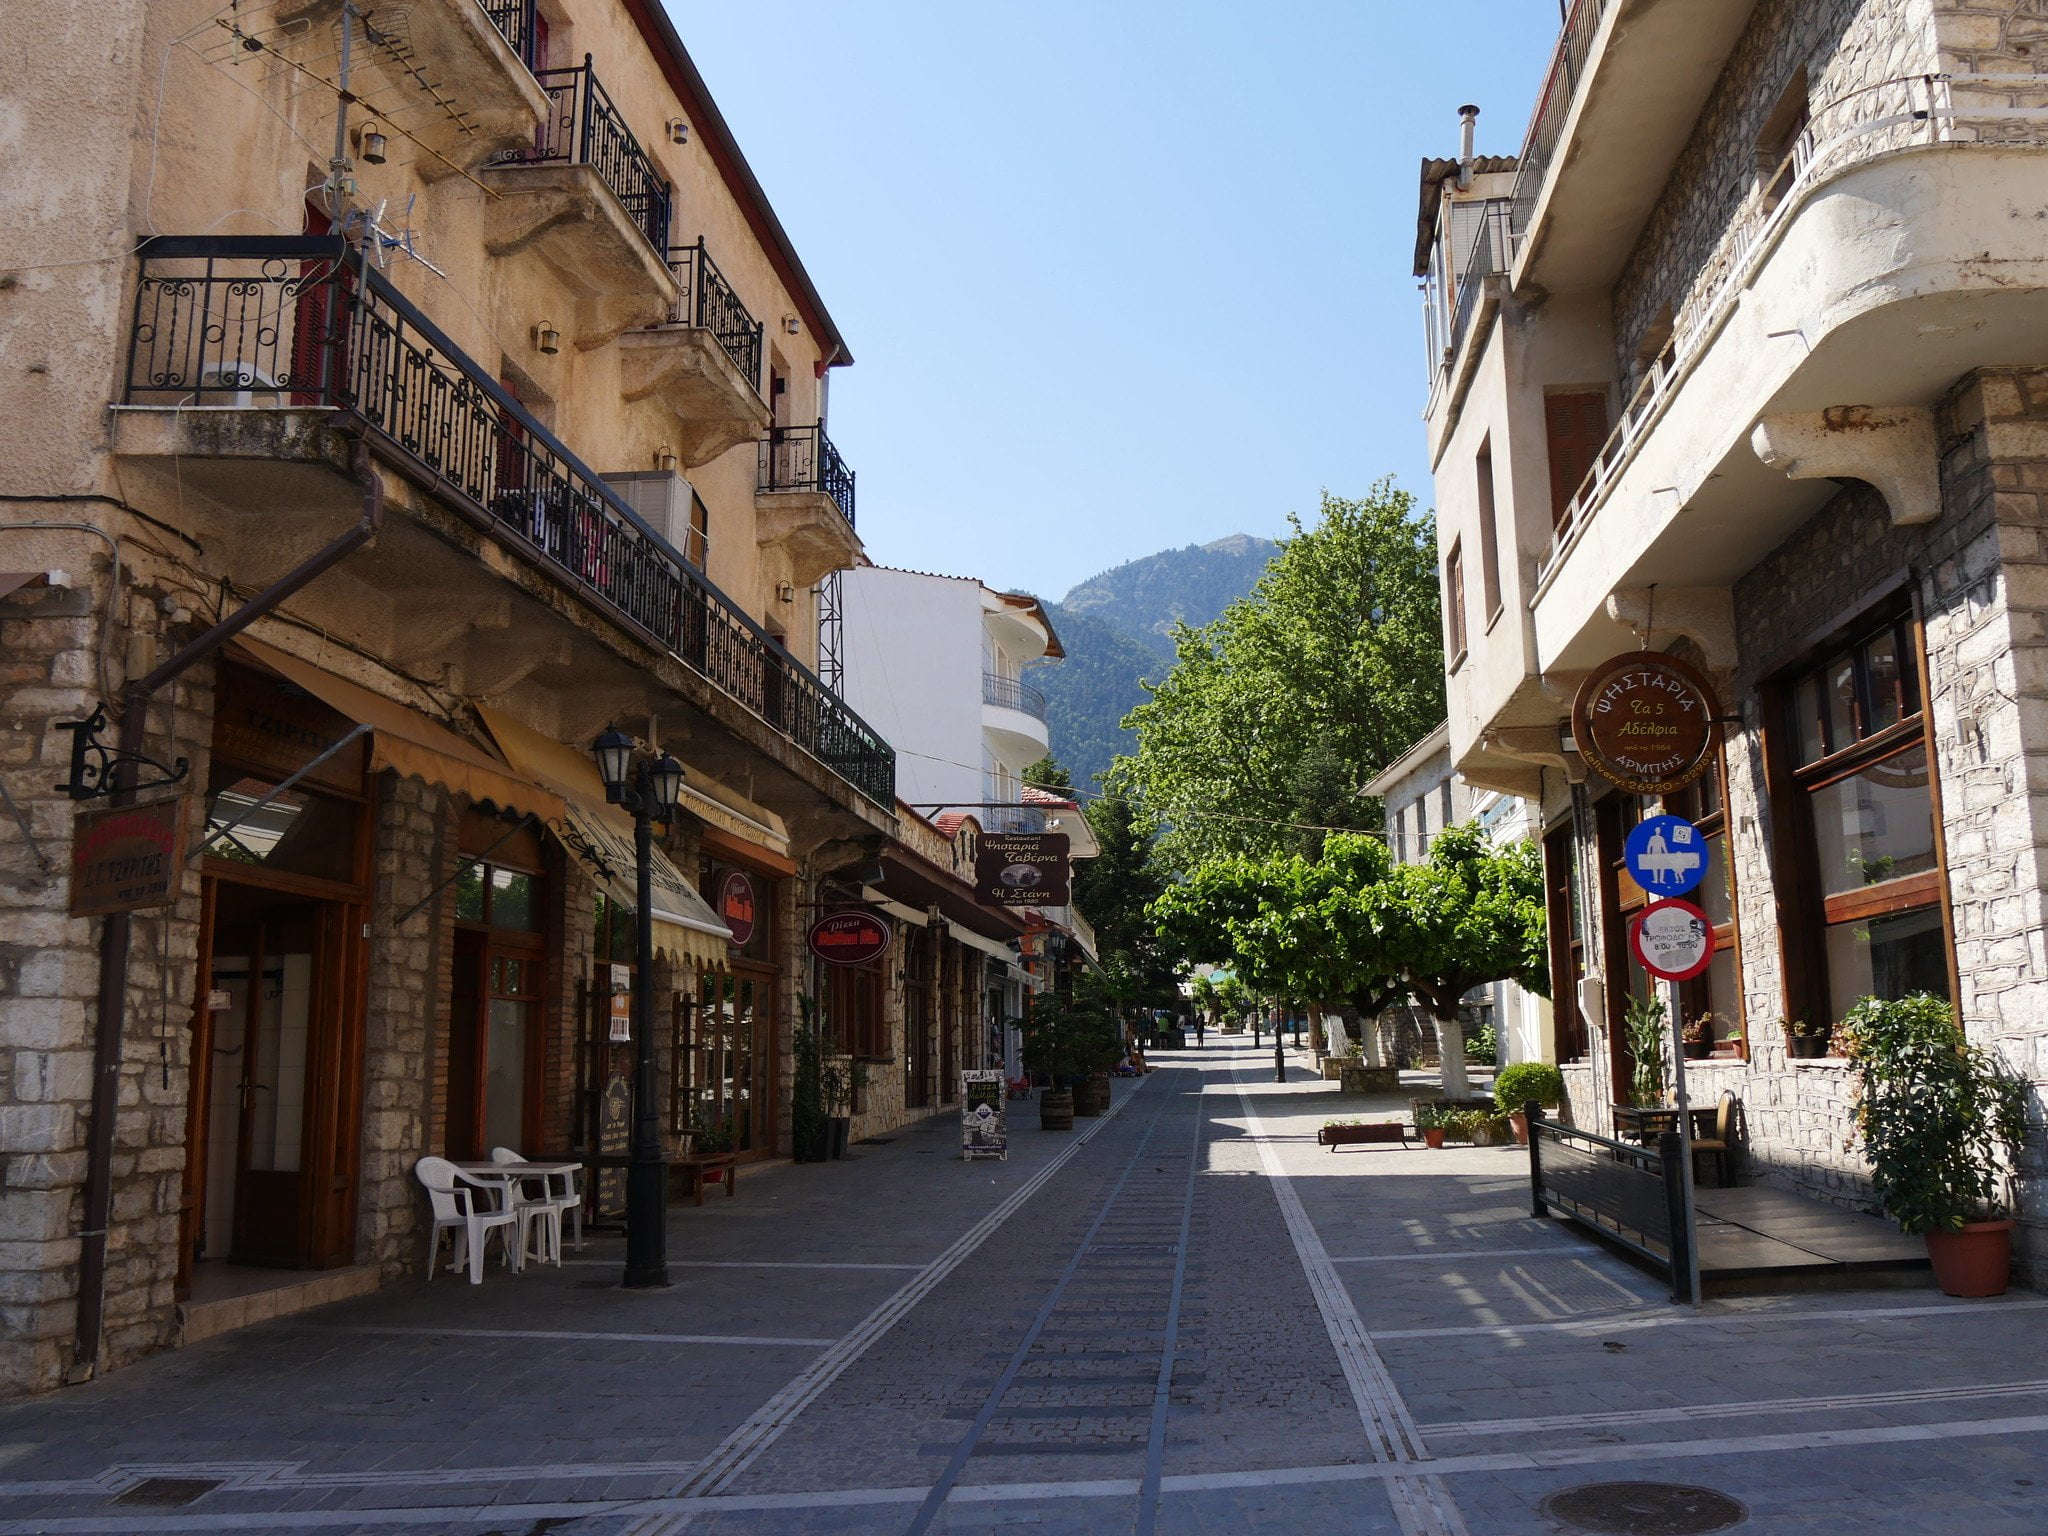 kalvryta village as a greek spring destination